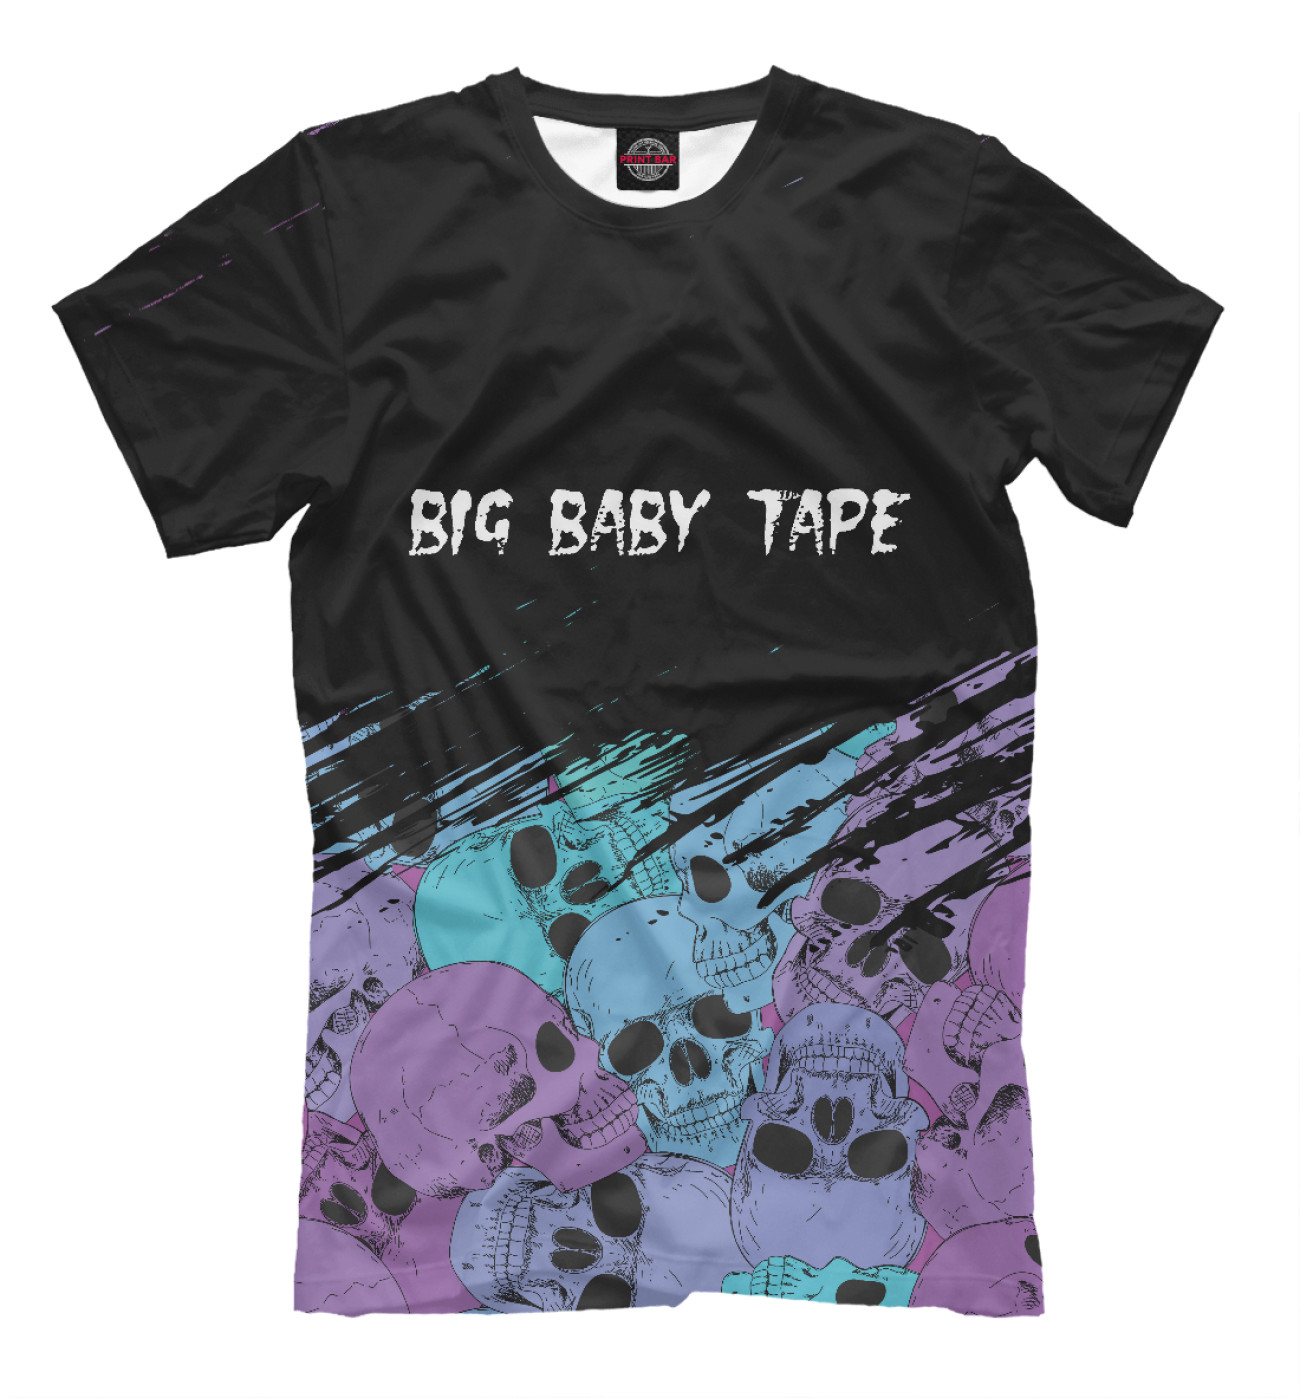 Мужская Футболка Big Baby Tape, артикул: BBT-727307-fut-2